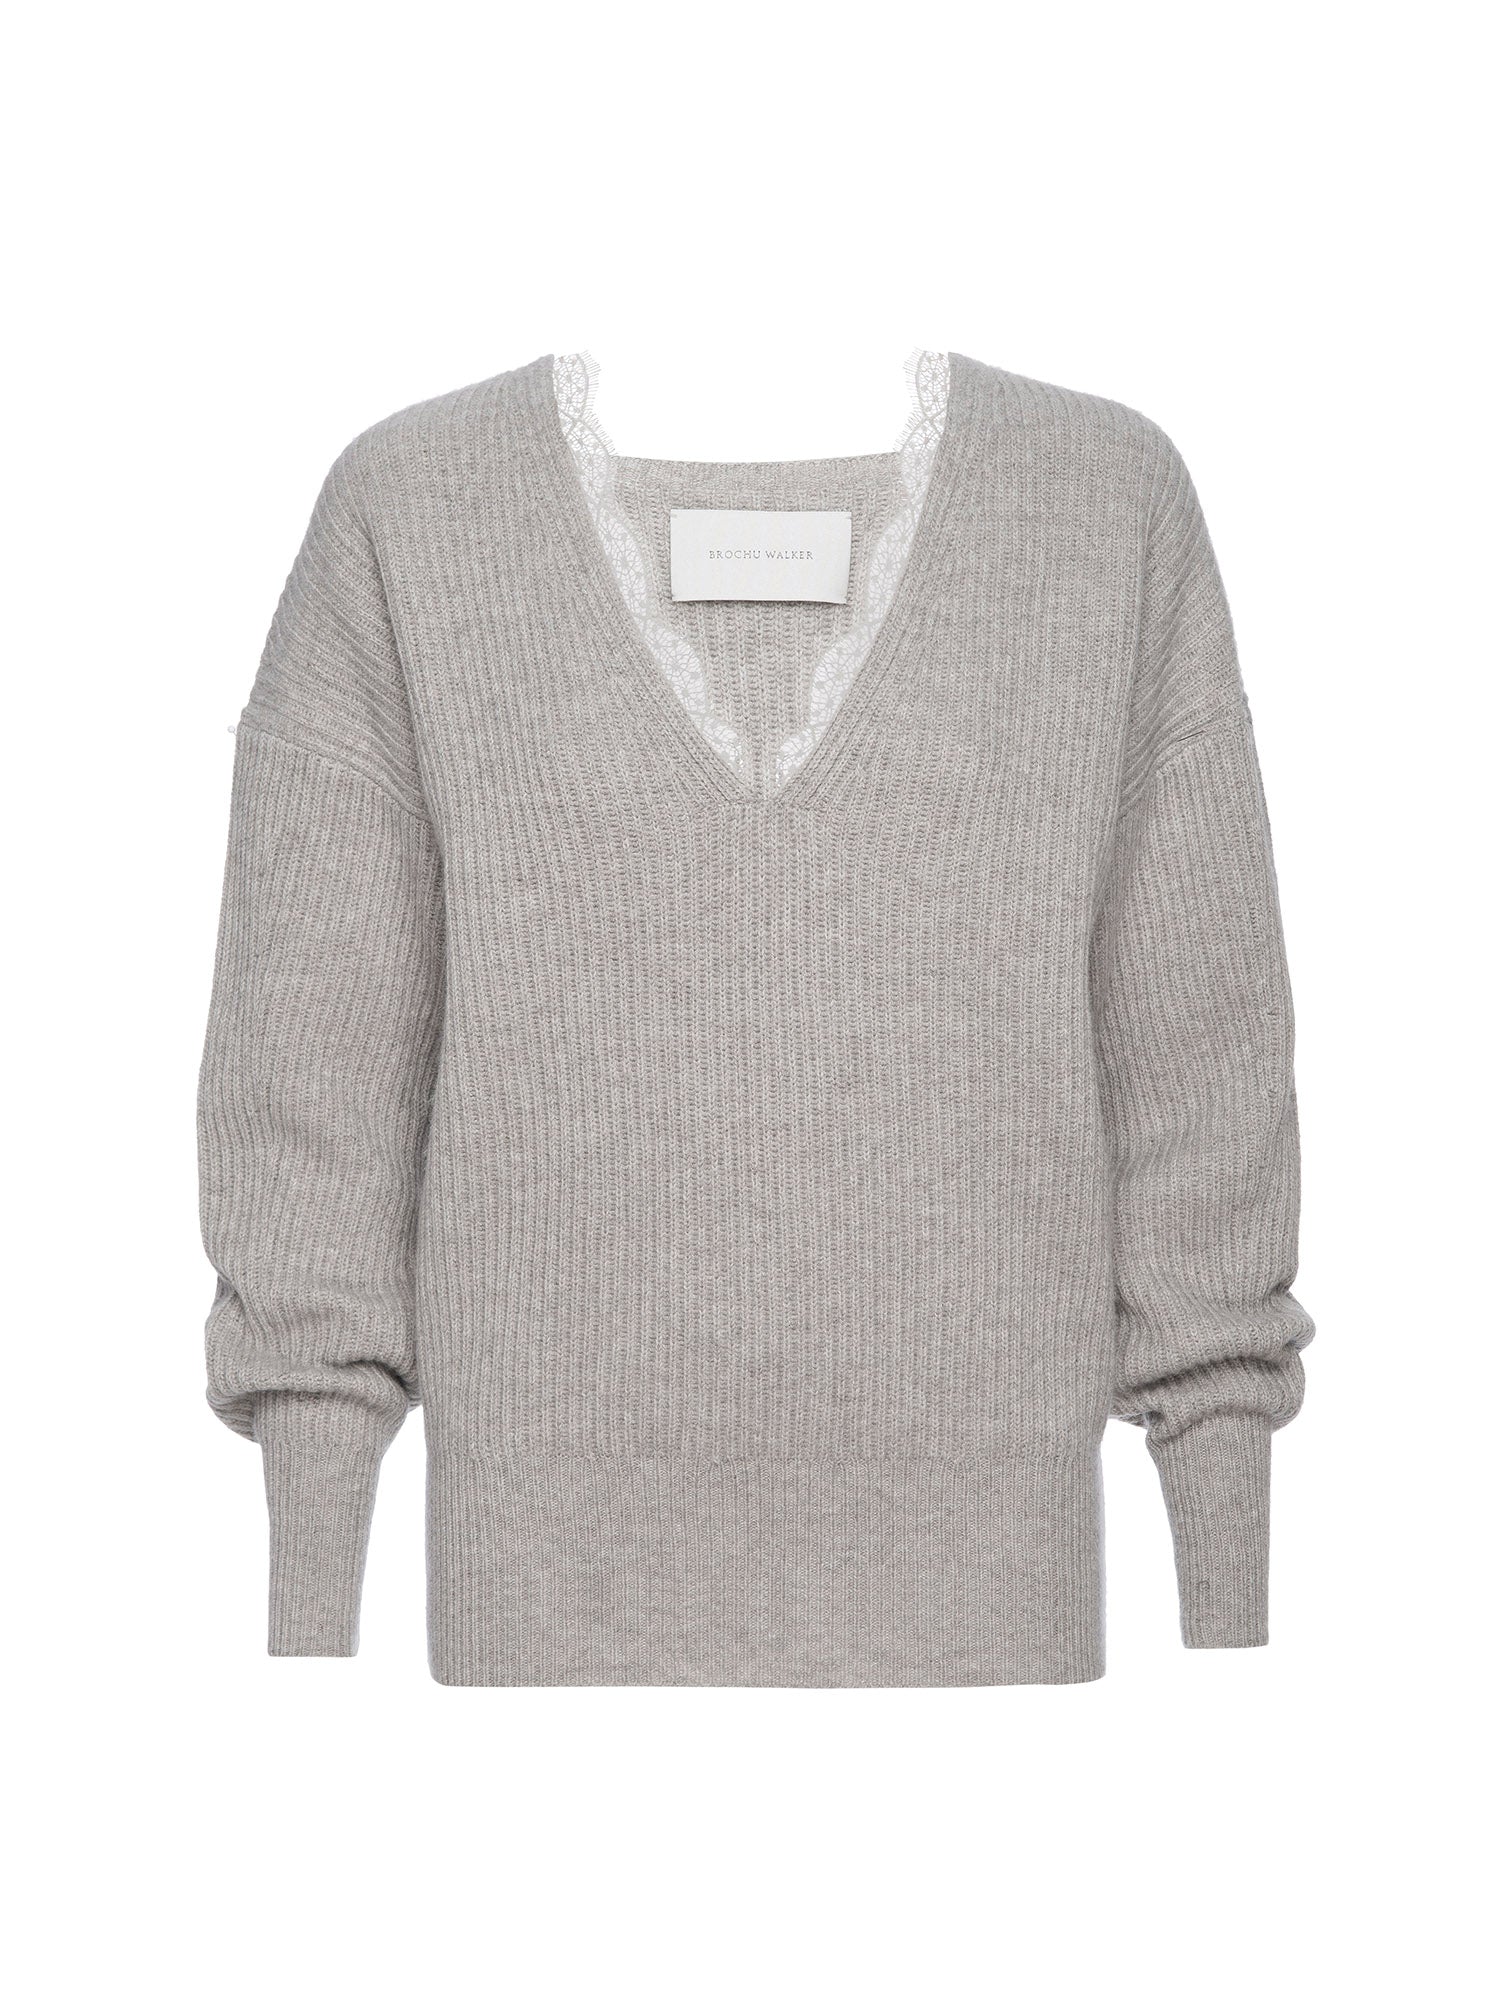 Ava V-neck light grey sweater flat view